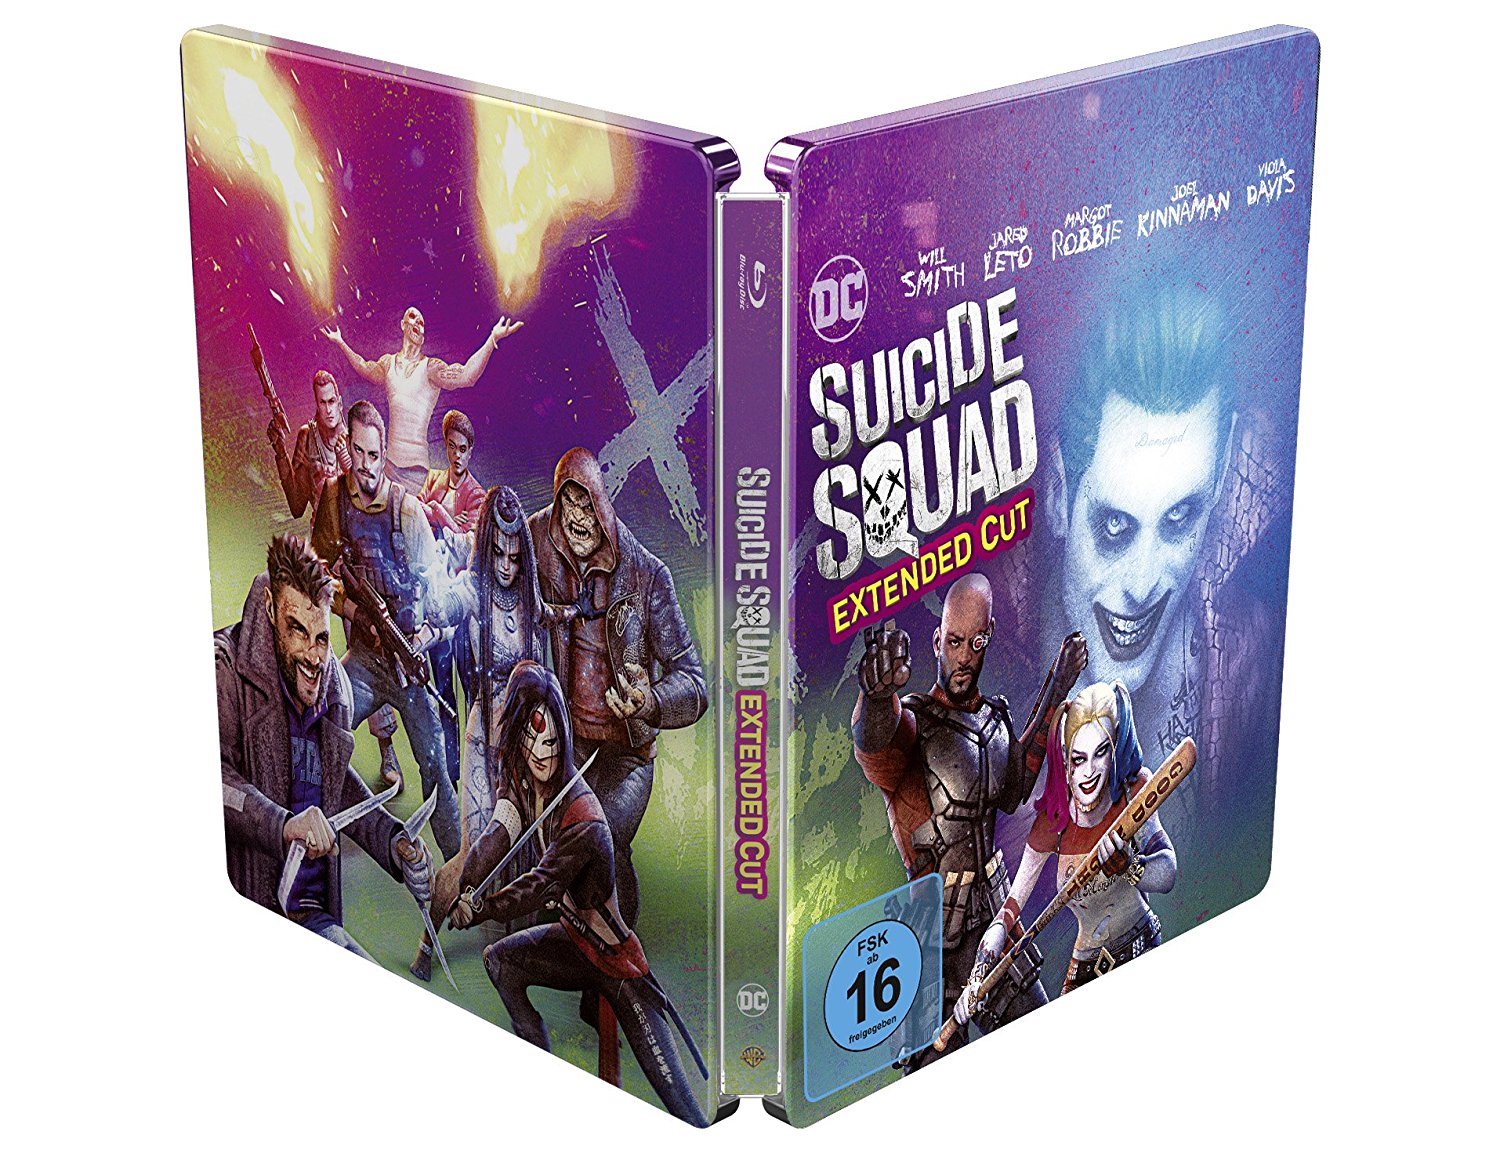 Suicide Squad steelbook 1